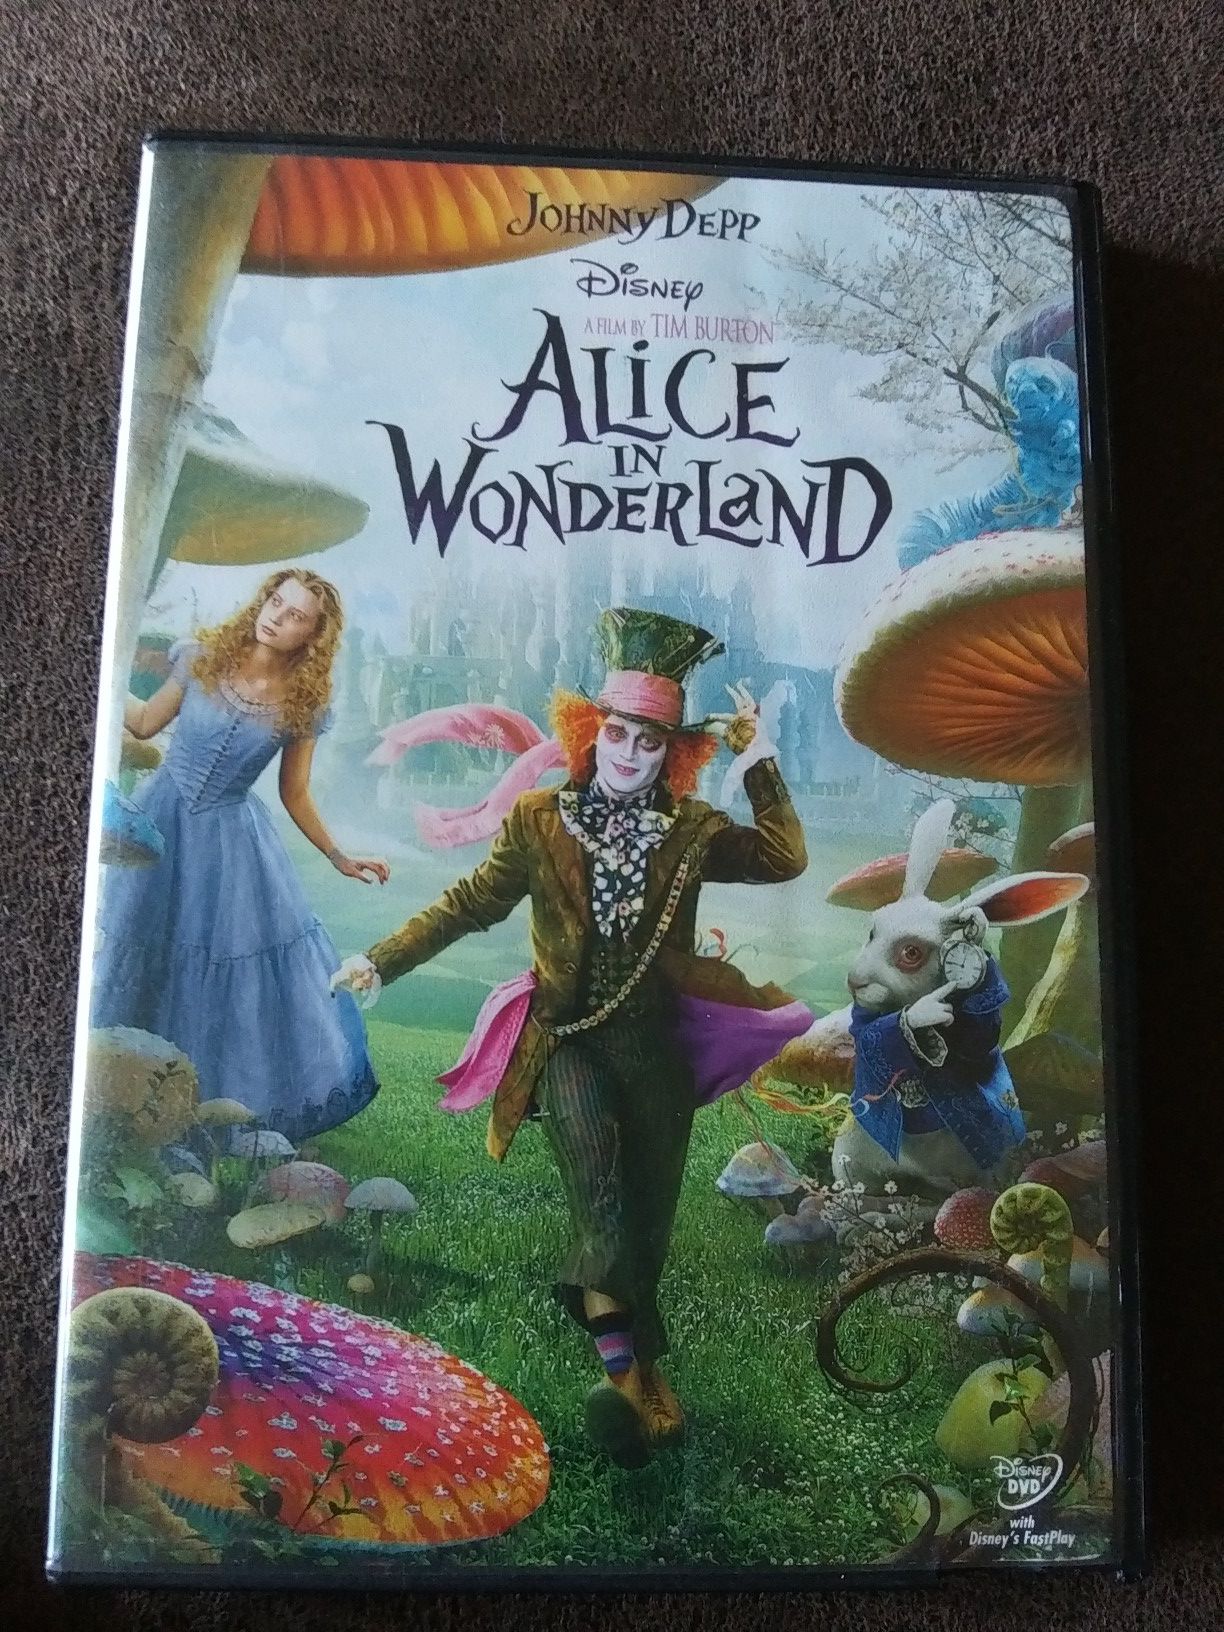 Disney Alice in Wonderland DVD ($2)